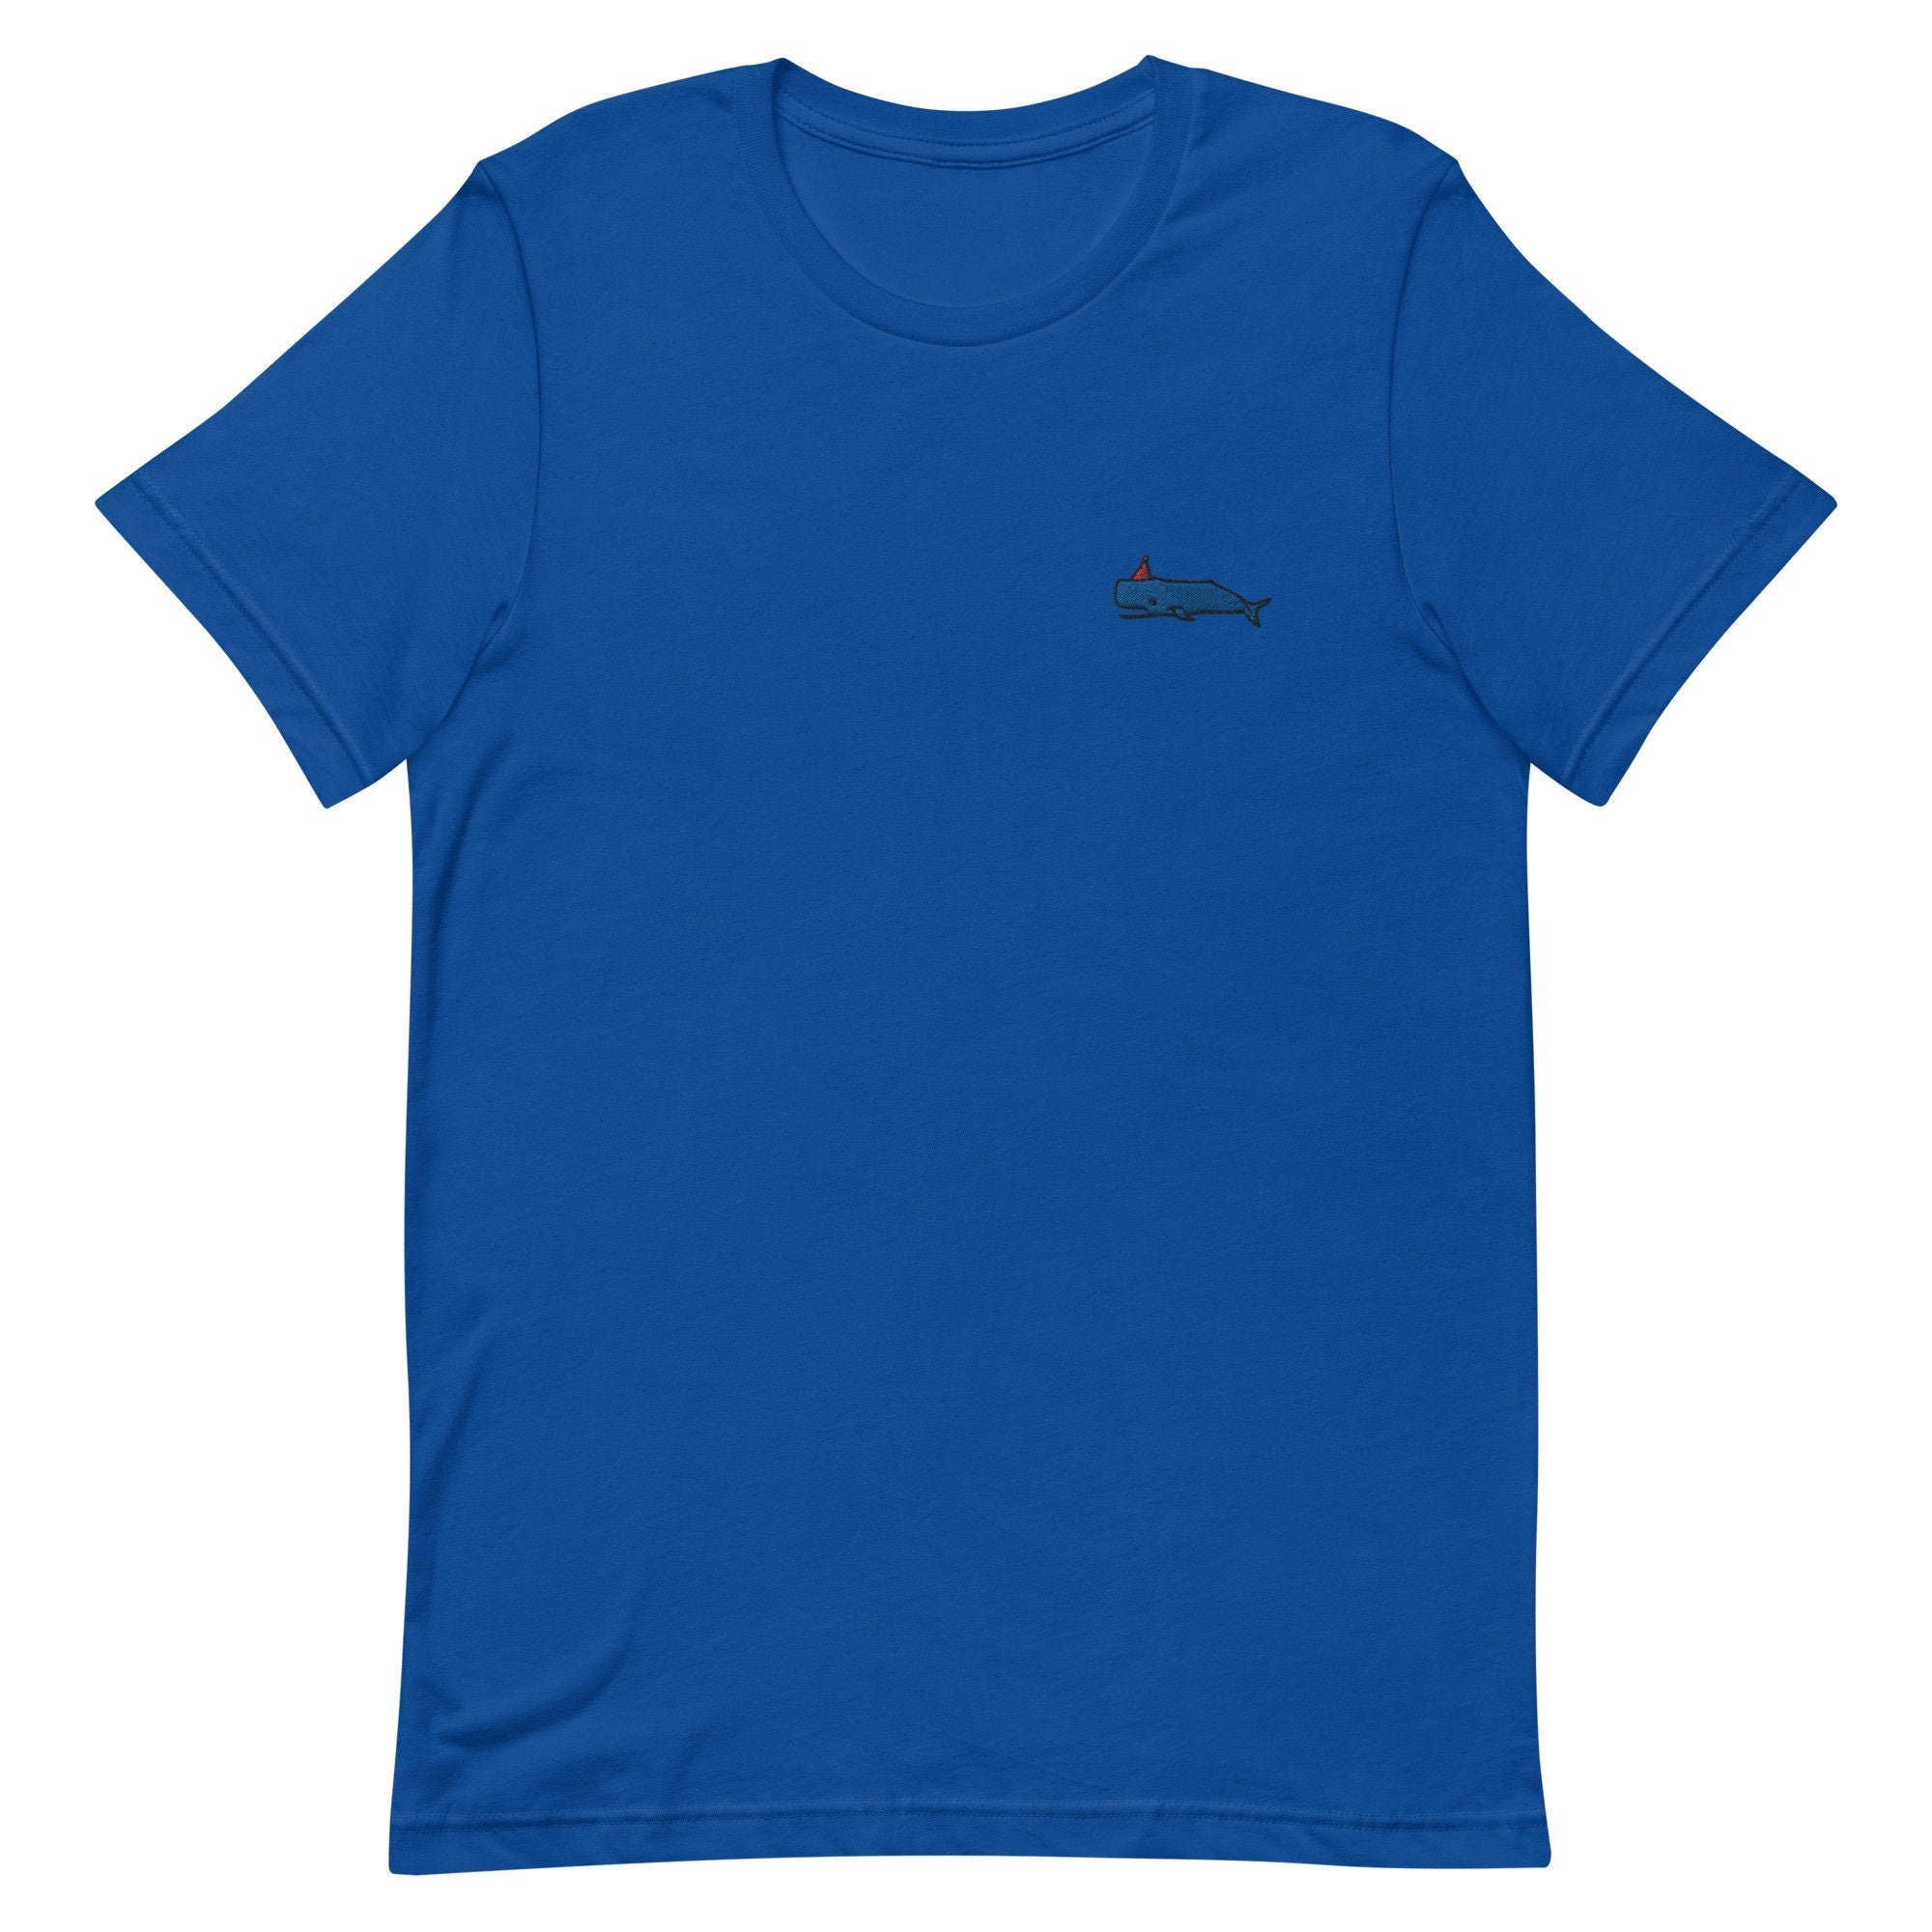 Party Whale Premium Men's T-Shirt, Embroidered Men's T-Shirt Gift for Boyfriend, Men's Short Sleeve Shirt - Multiple Colors